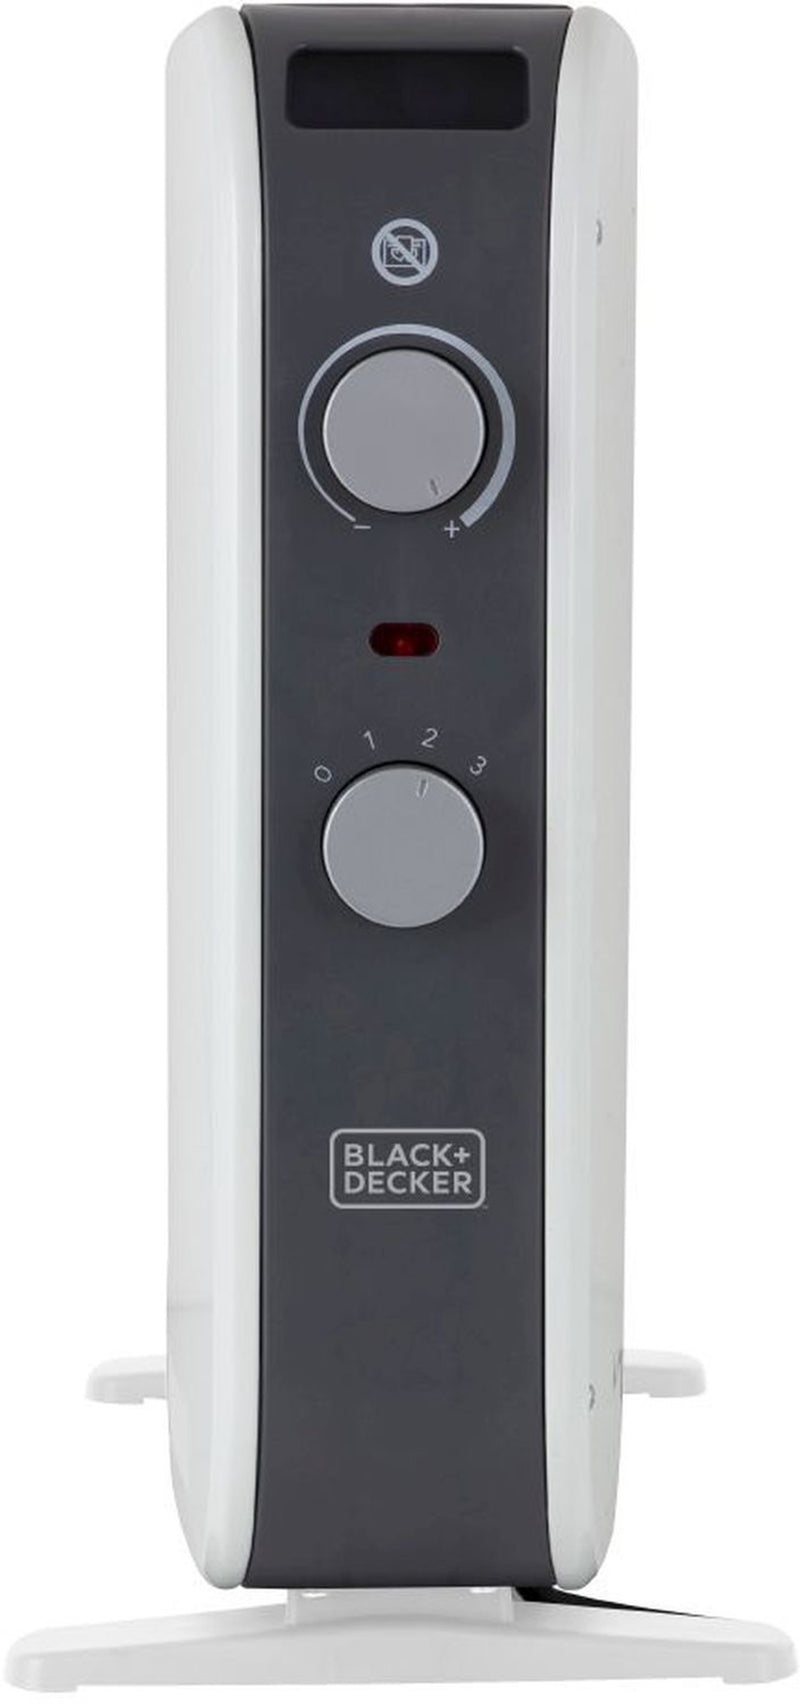 Black Decker BXCV41001GB 2kw Portable Convector Heater White